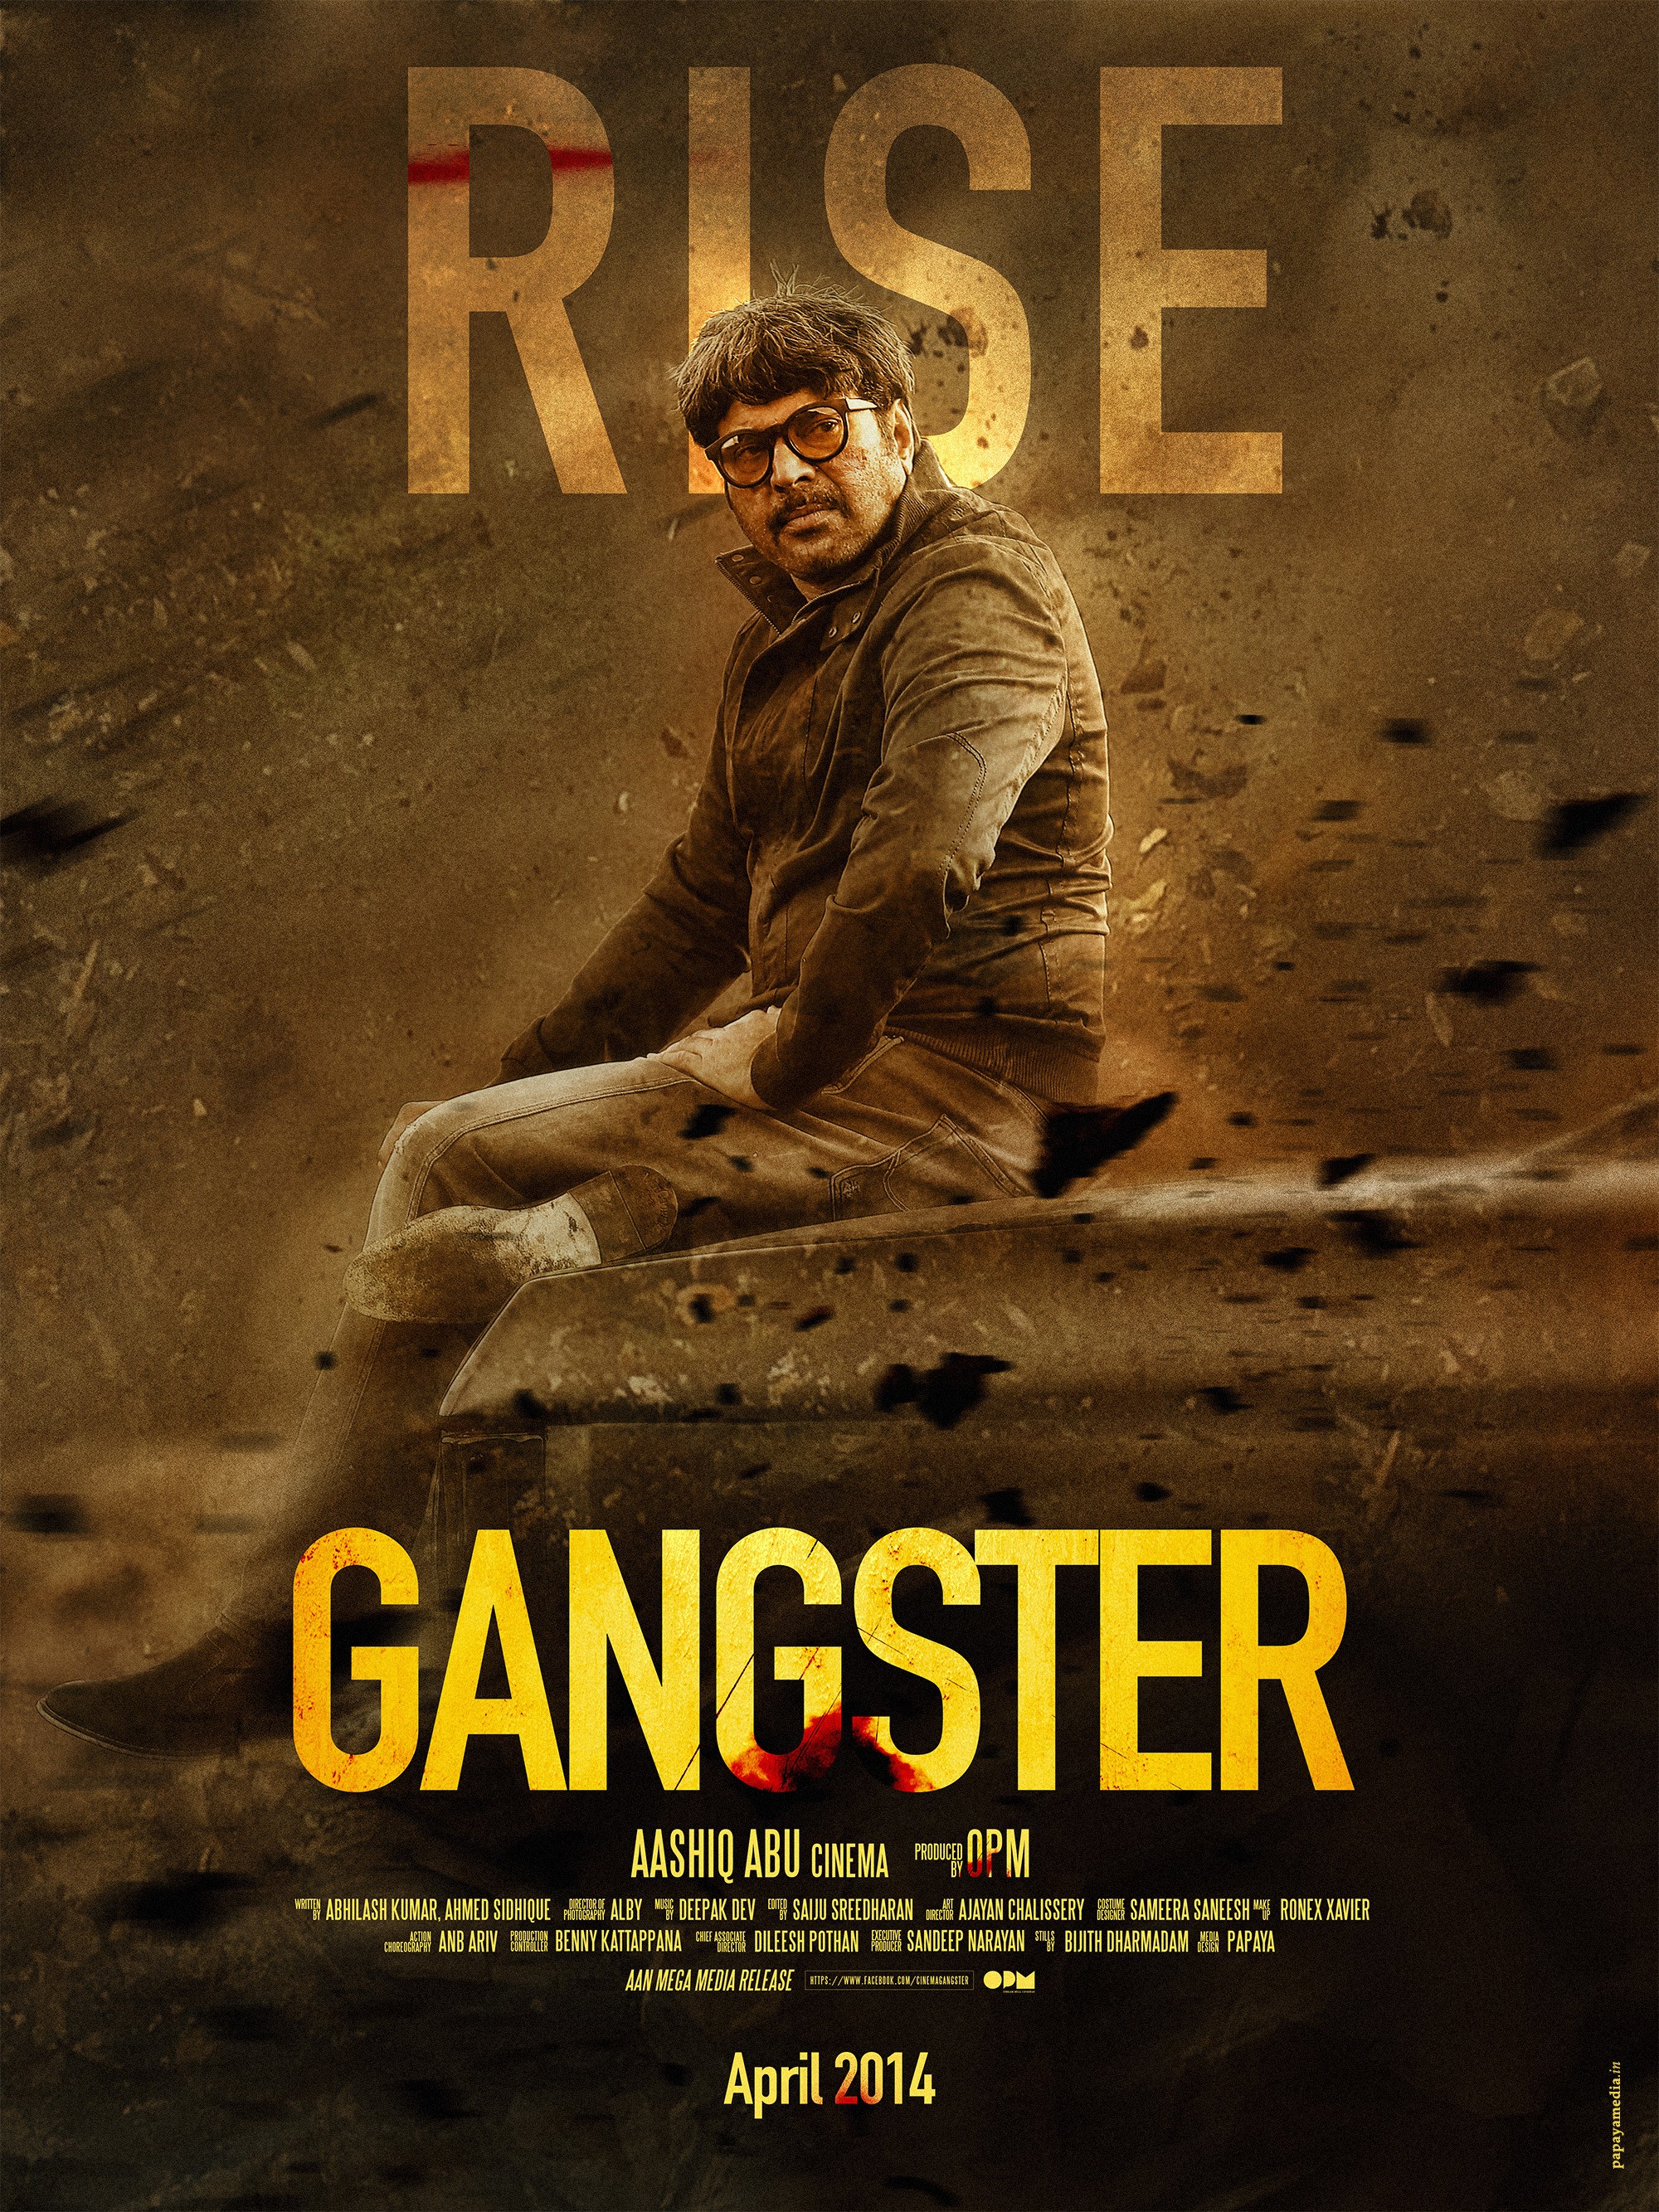 Mega Sized Movie Poster Image for Gangster (#5 of 6)